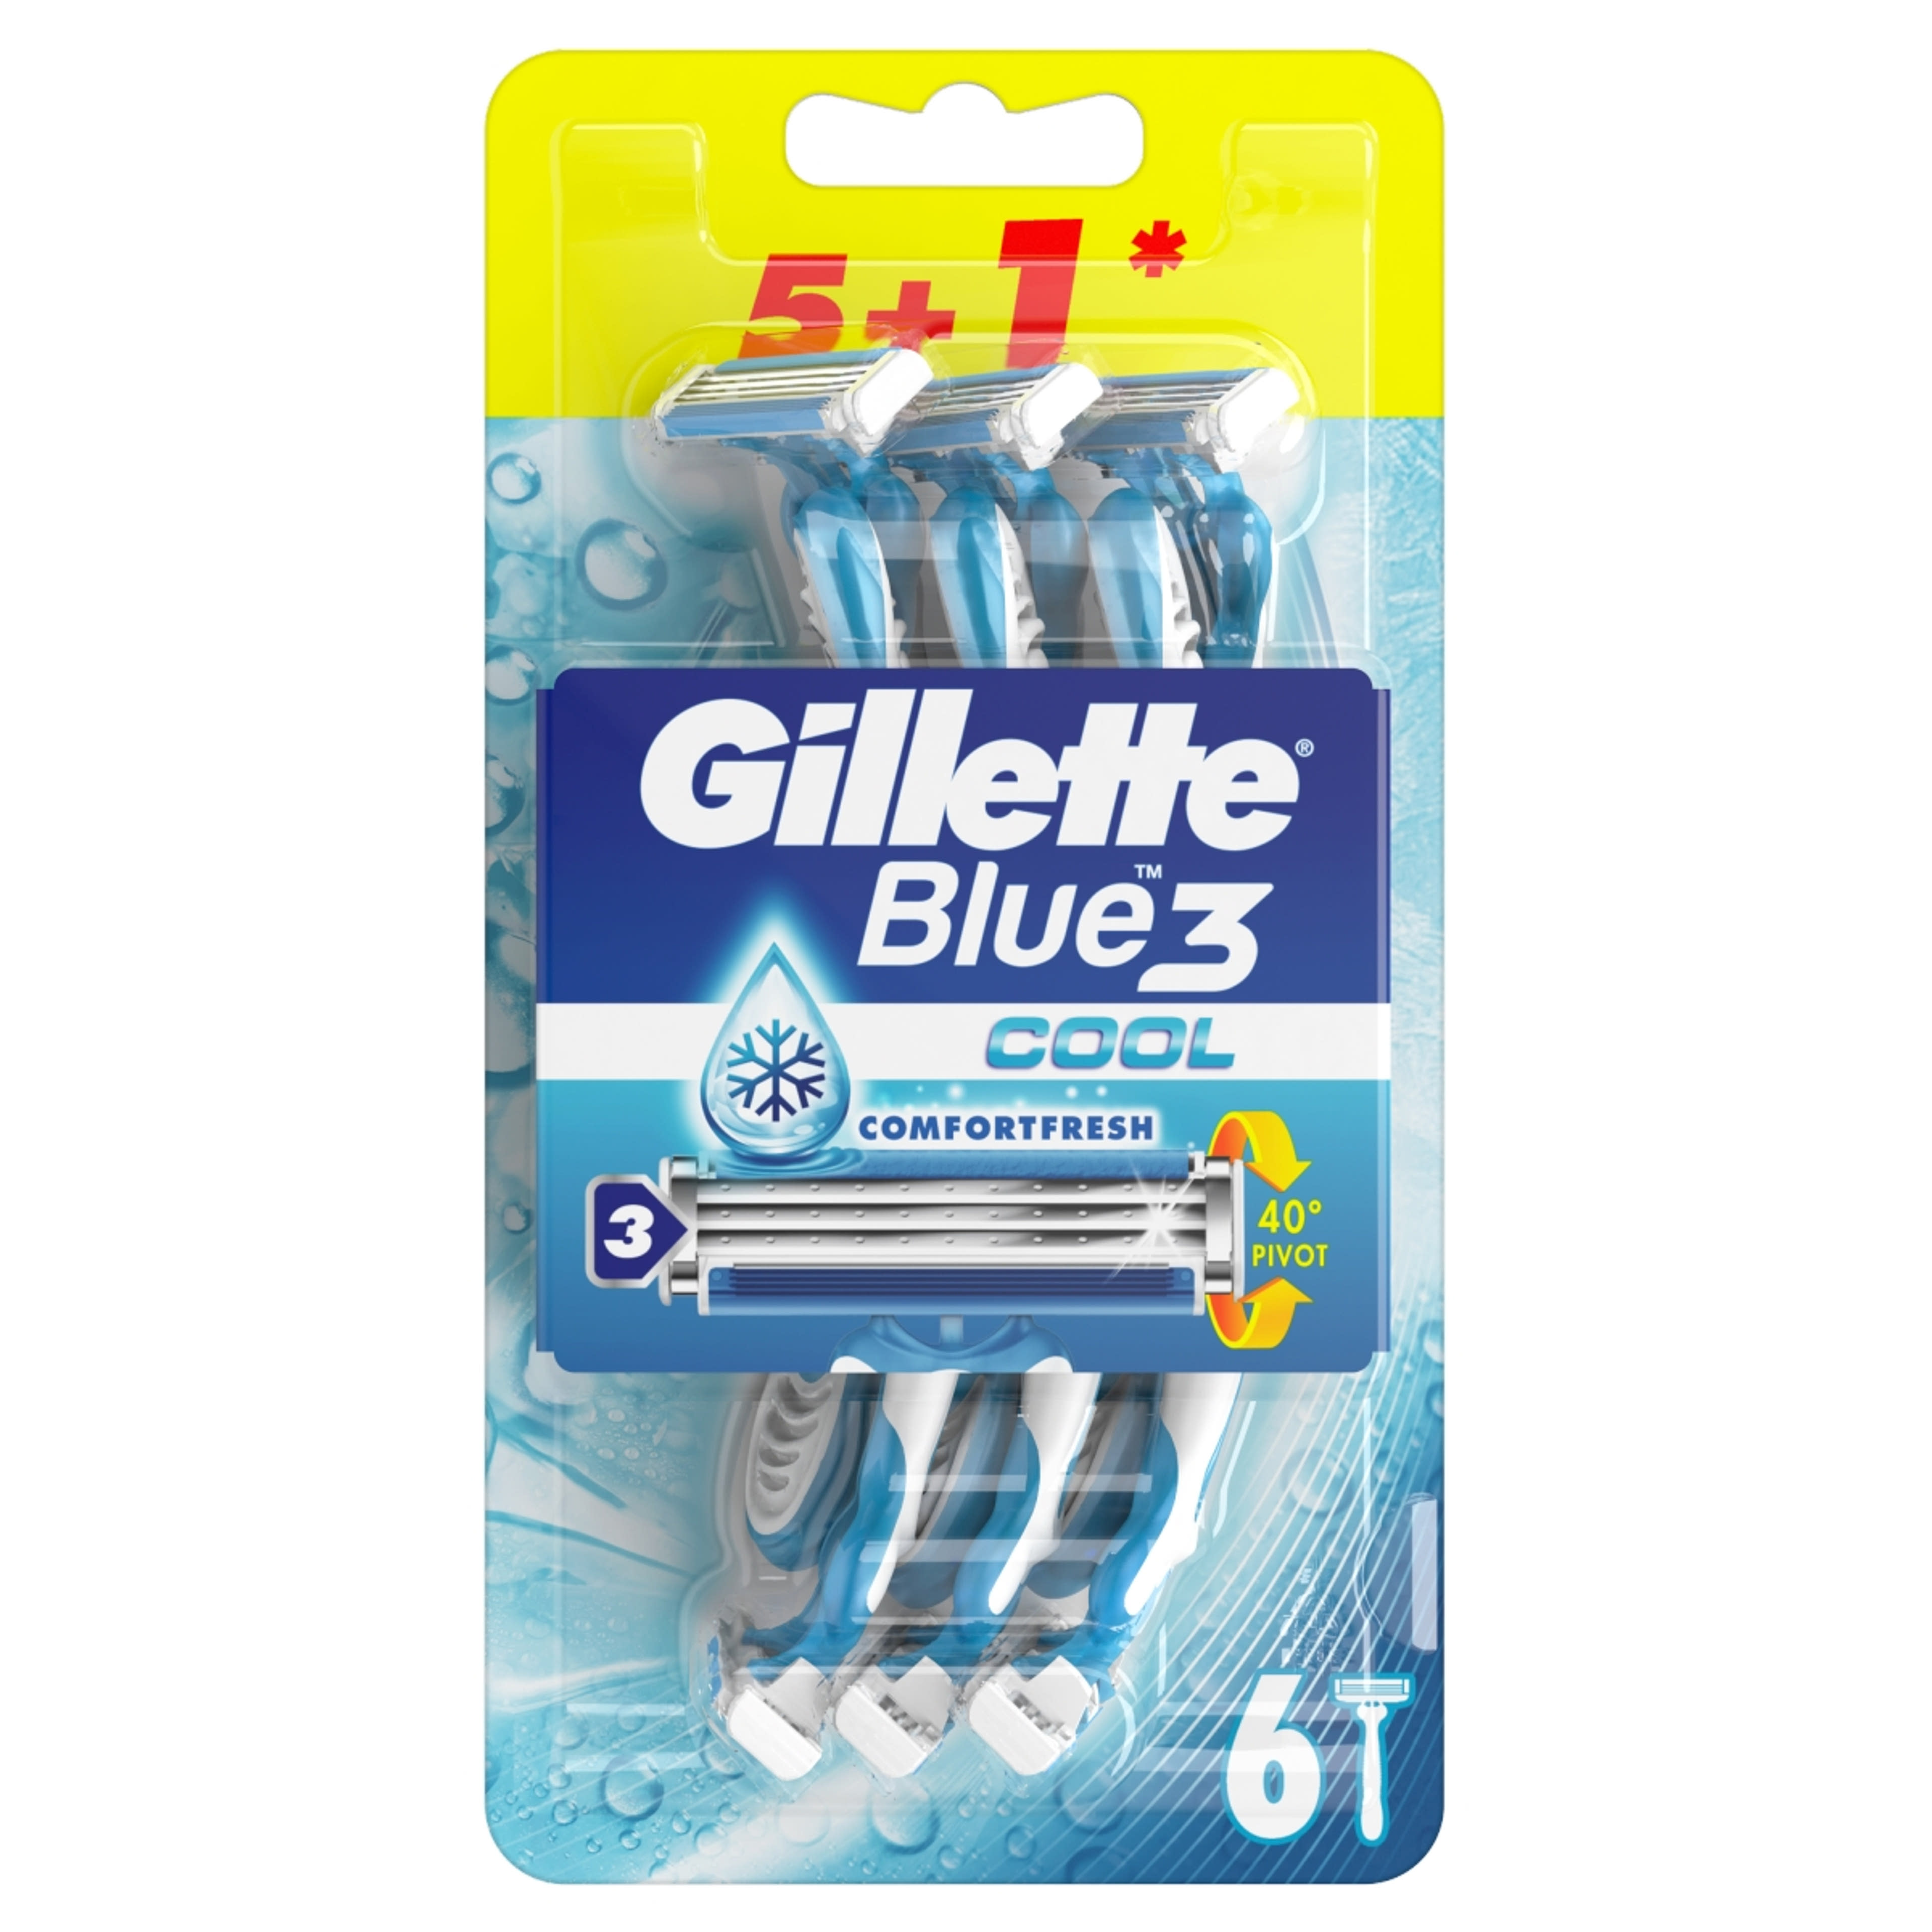 Gillette blue3 cool eldobható borotva 5 + 1 - 6 db